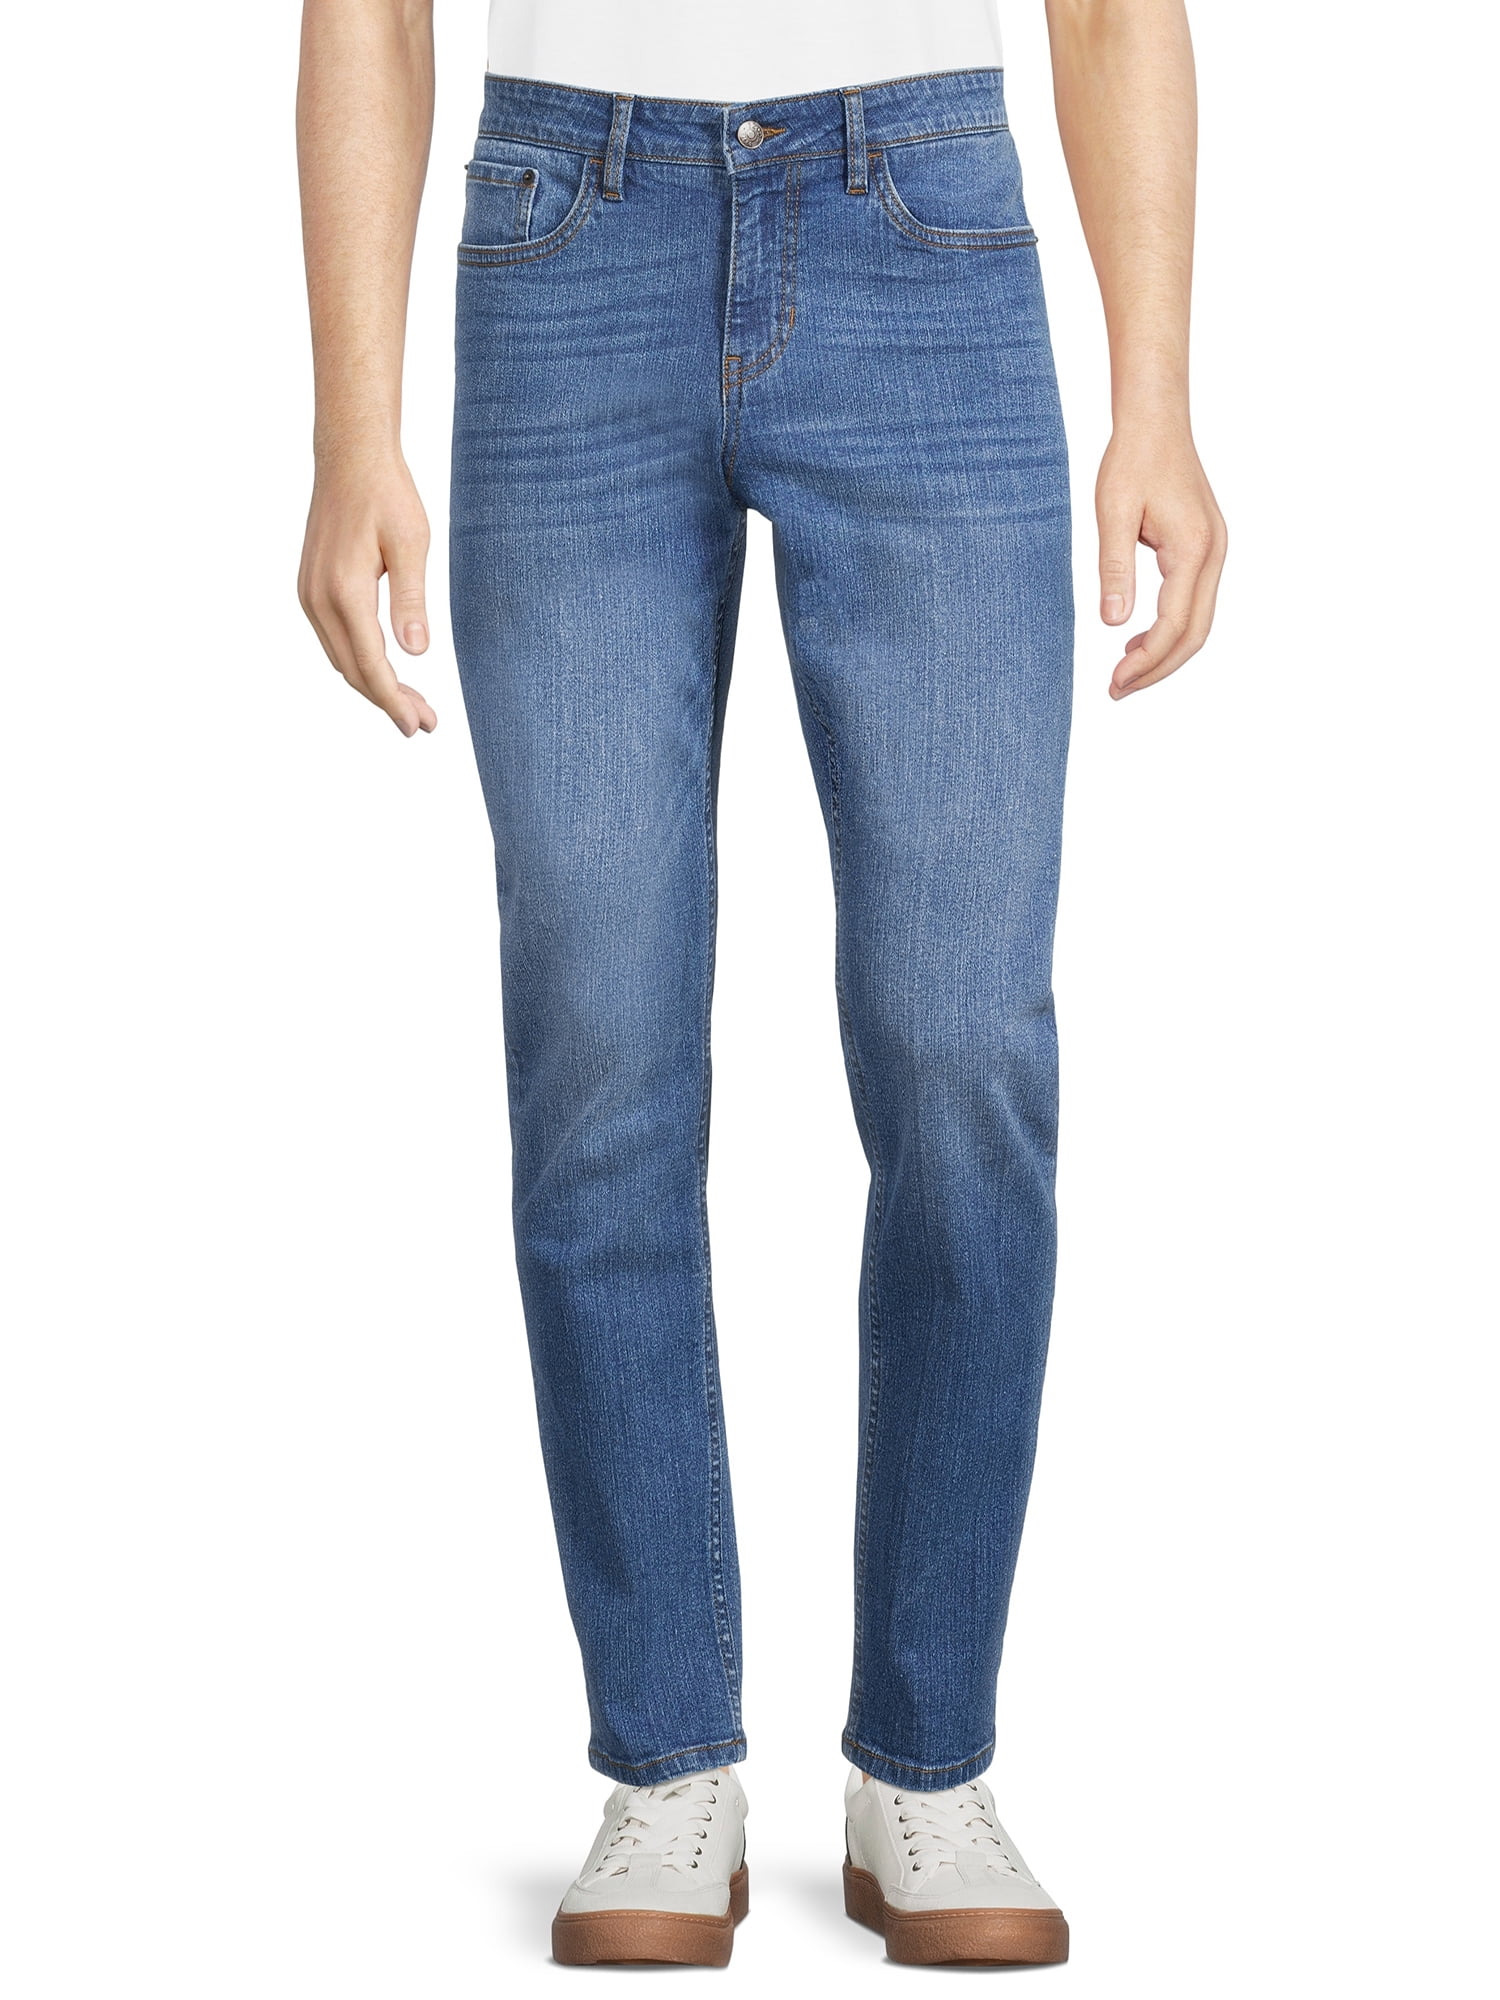 IZOD Men’s Stretch Slim Fit Eco Jeans - Walmart.com